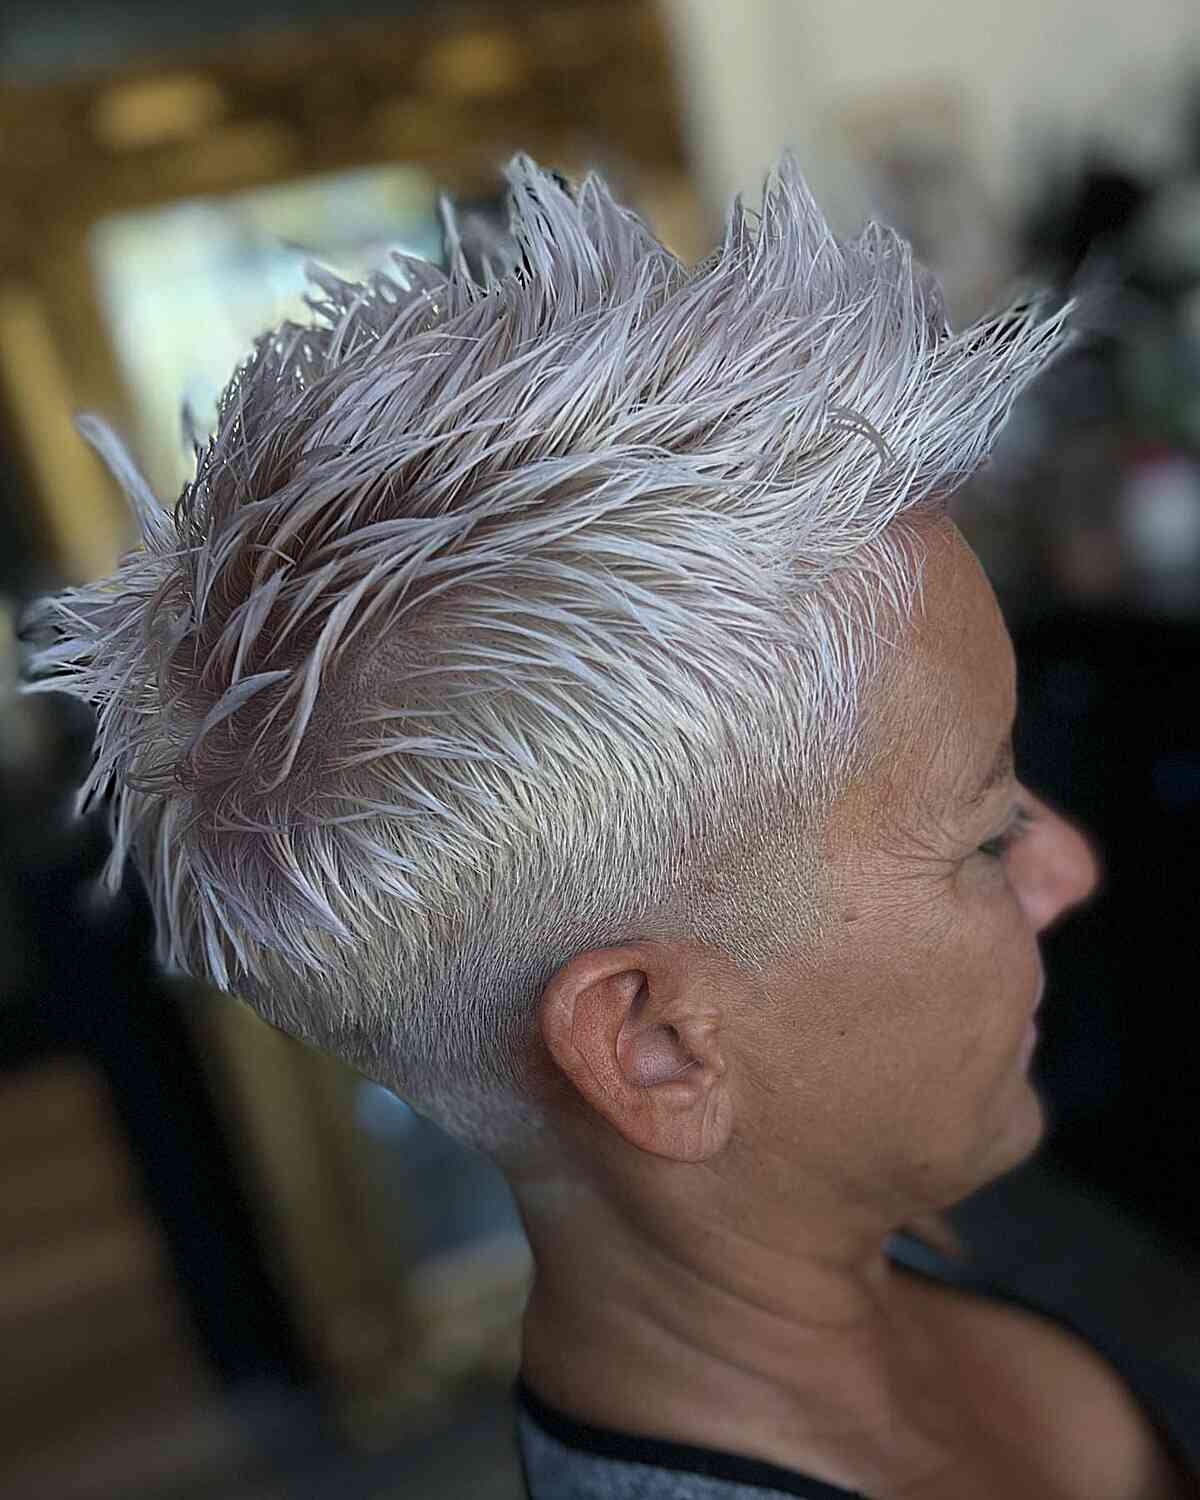 Platinum Blonde Color on Spiky, Short Haircut